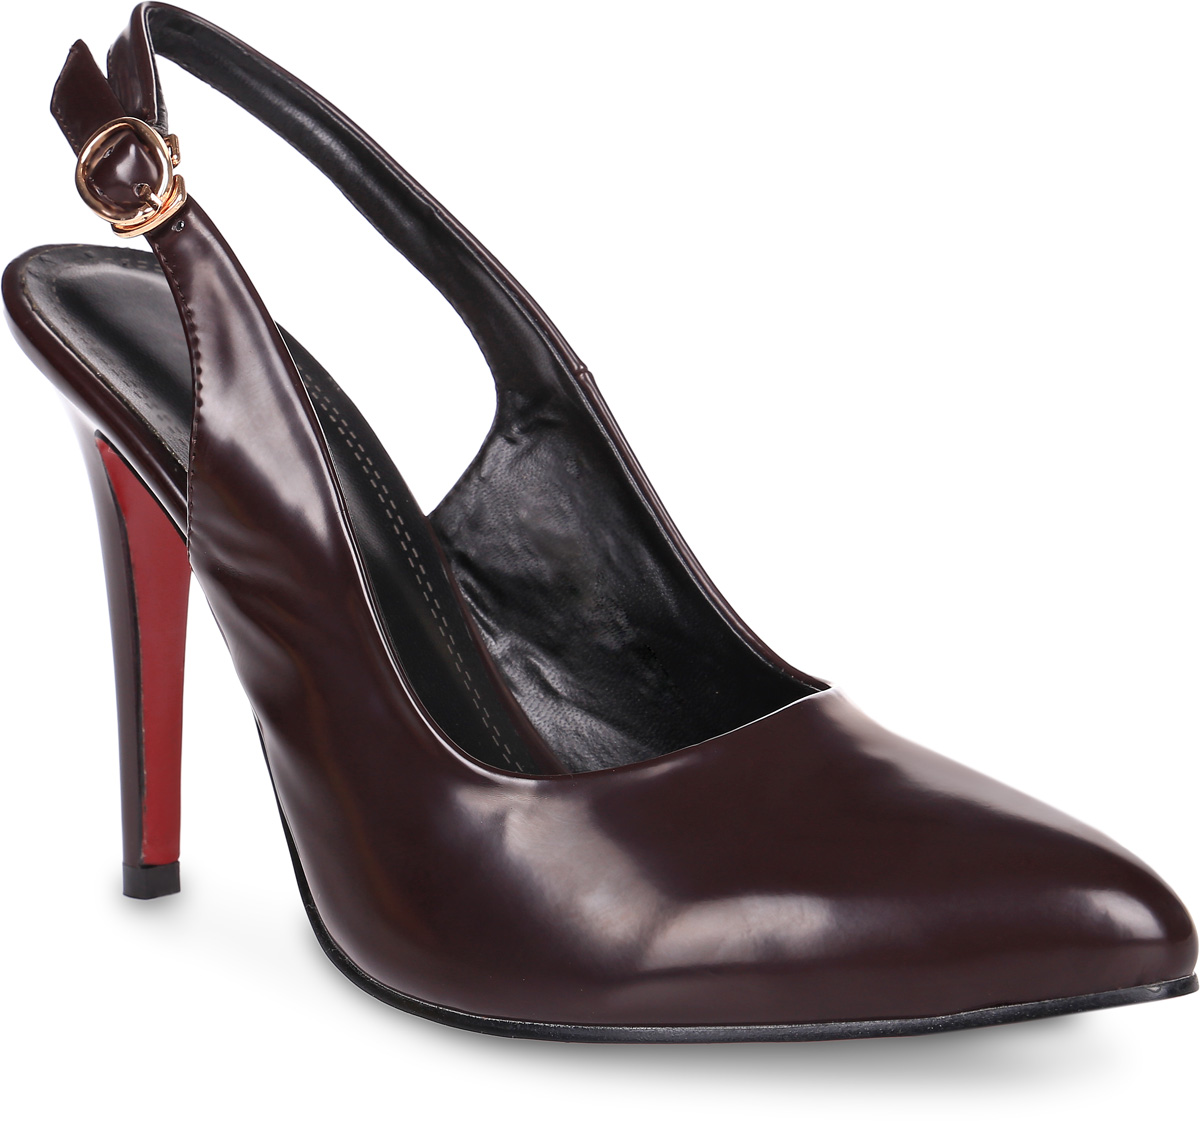 Туфли женские Inario, цвет: коричневый. 17068-01-18. Размер 38